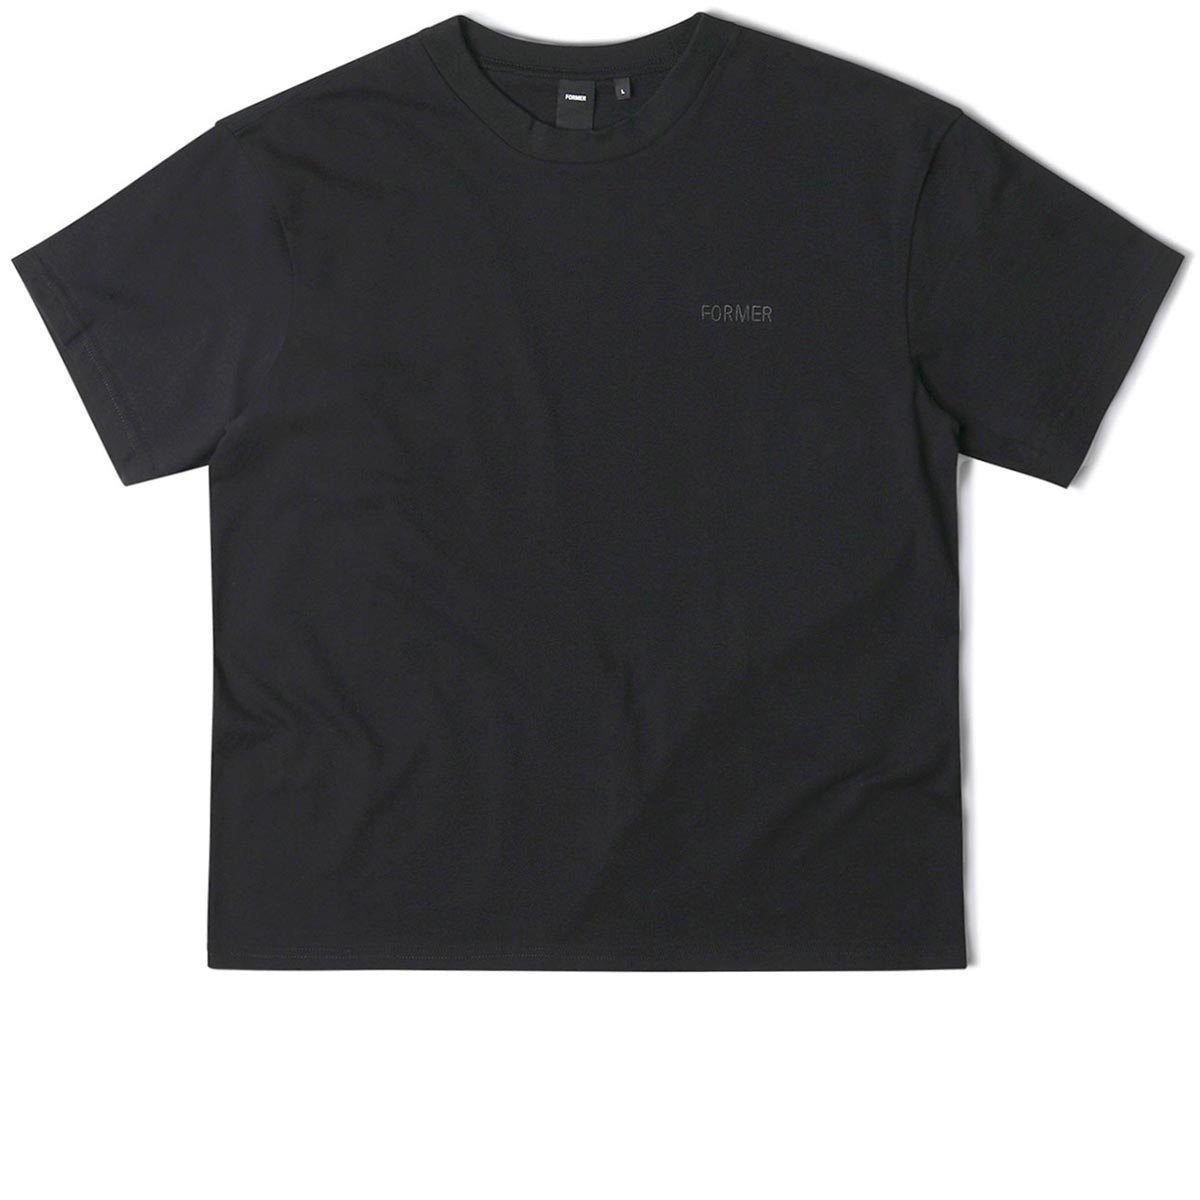 Former Legacy II T-Shirt - Black image 1